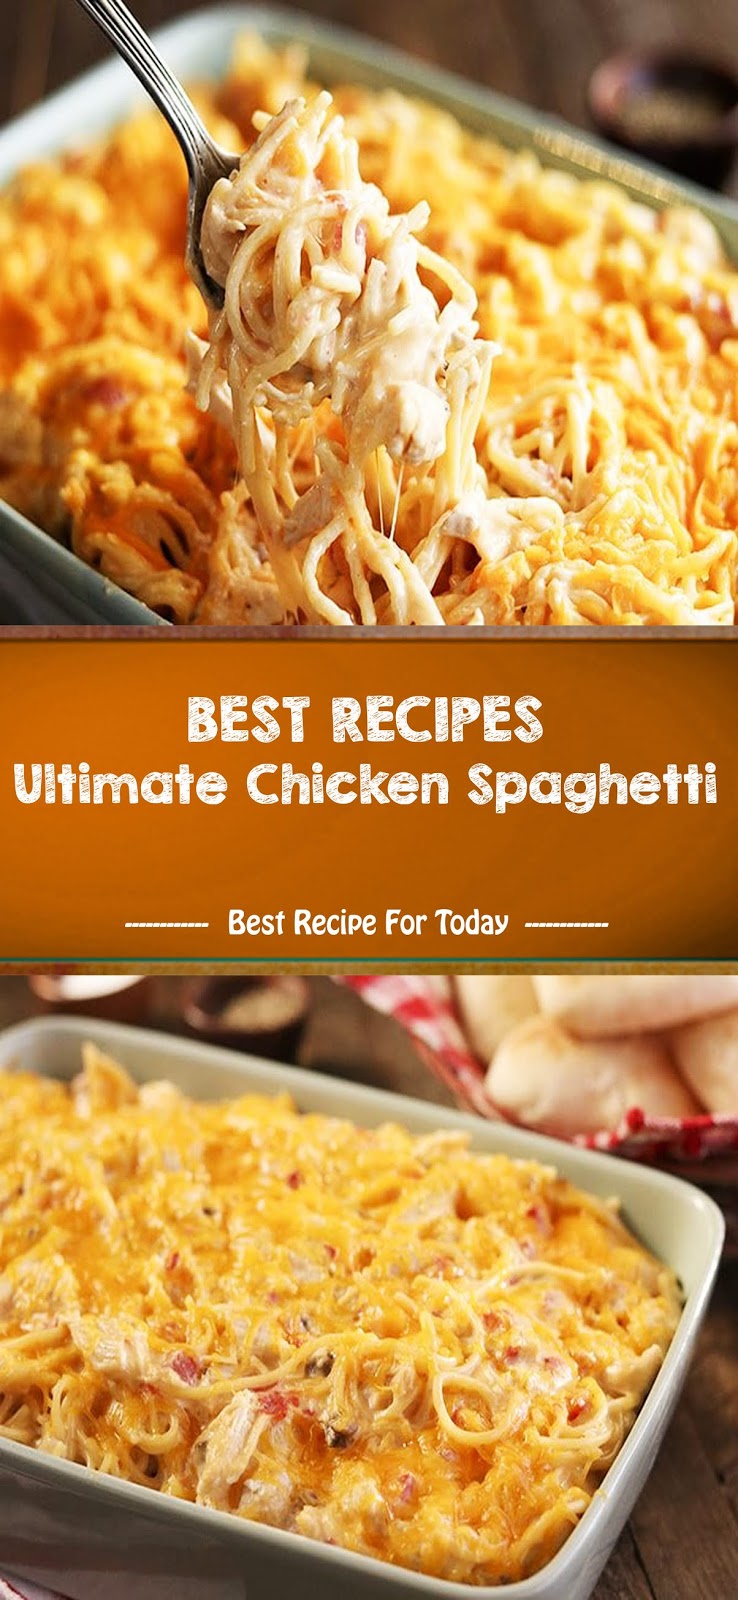 BEST RECIPES Ultimate Chicken Spaghetti | Healthyrecipes-04